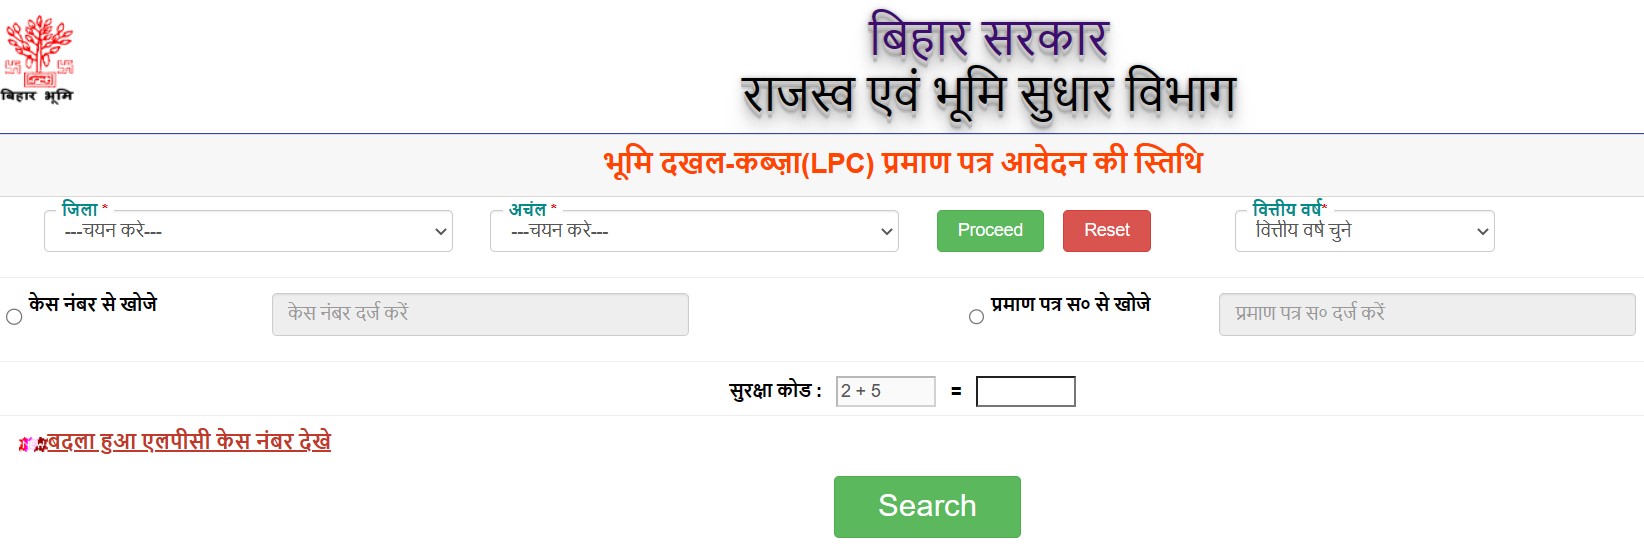 bihar LPC application status check